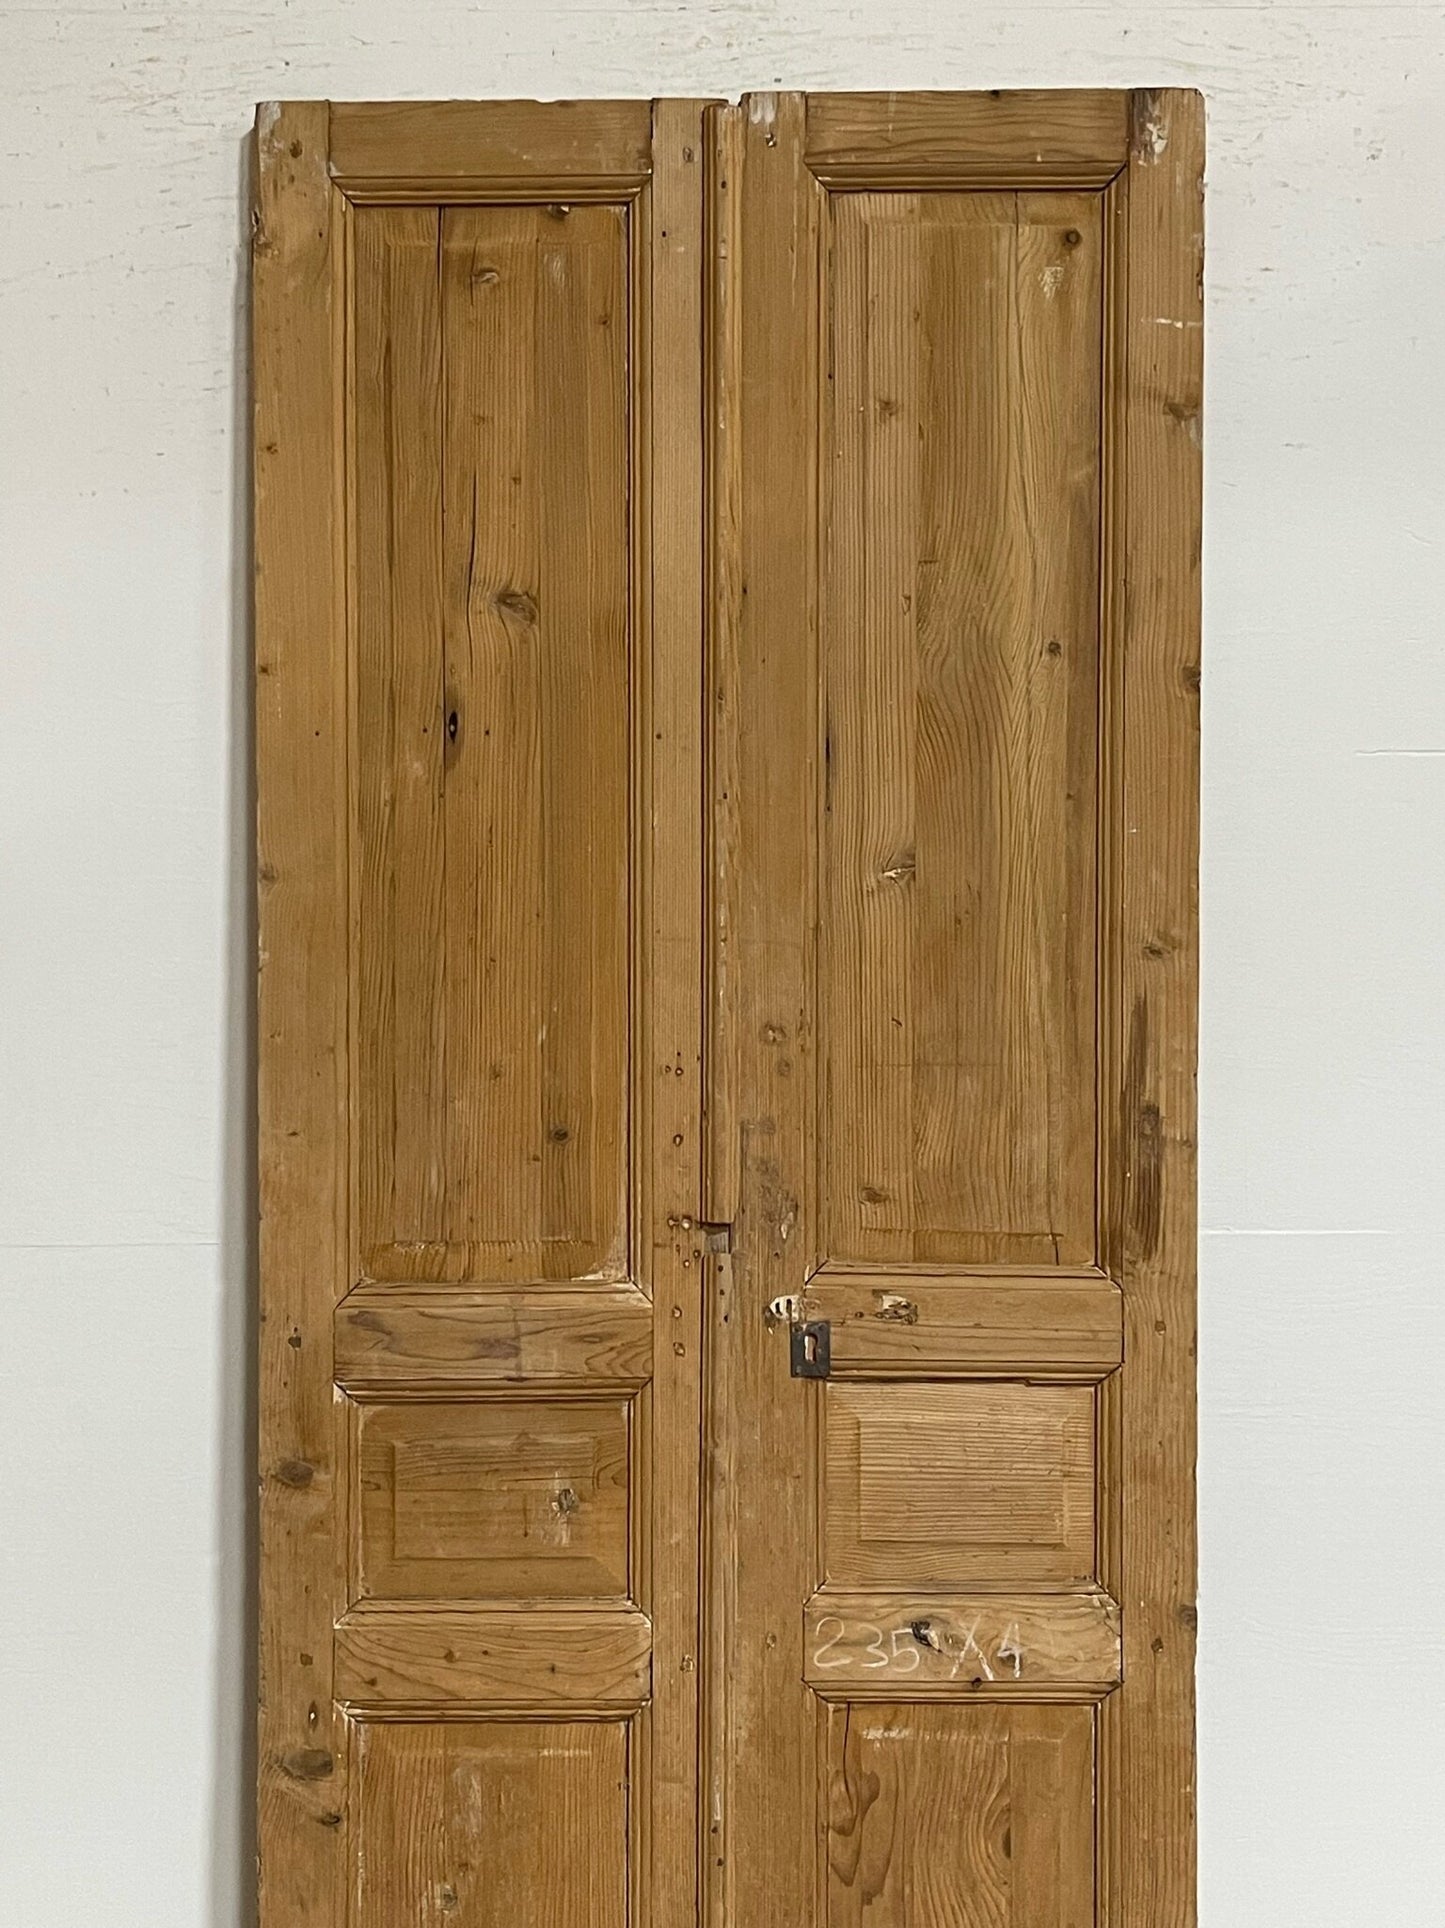 Antique French doors (92.5X39.25) G0164